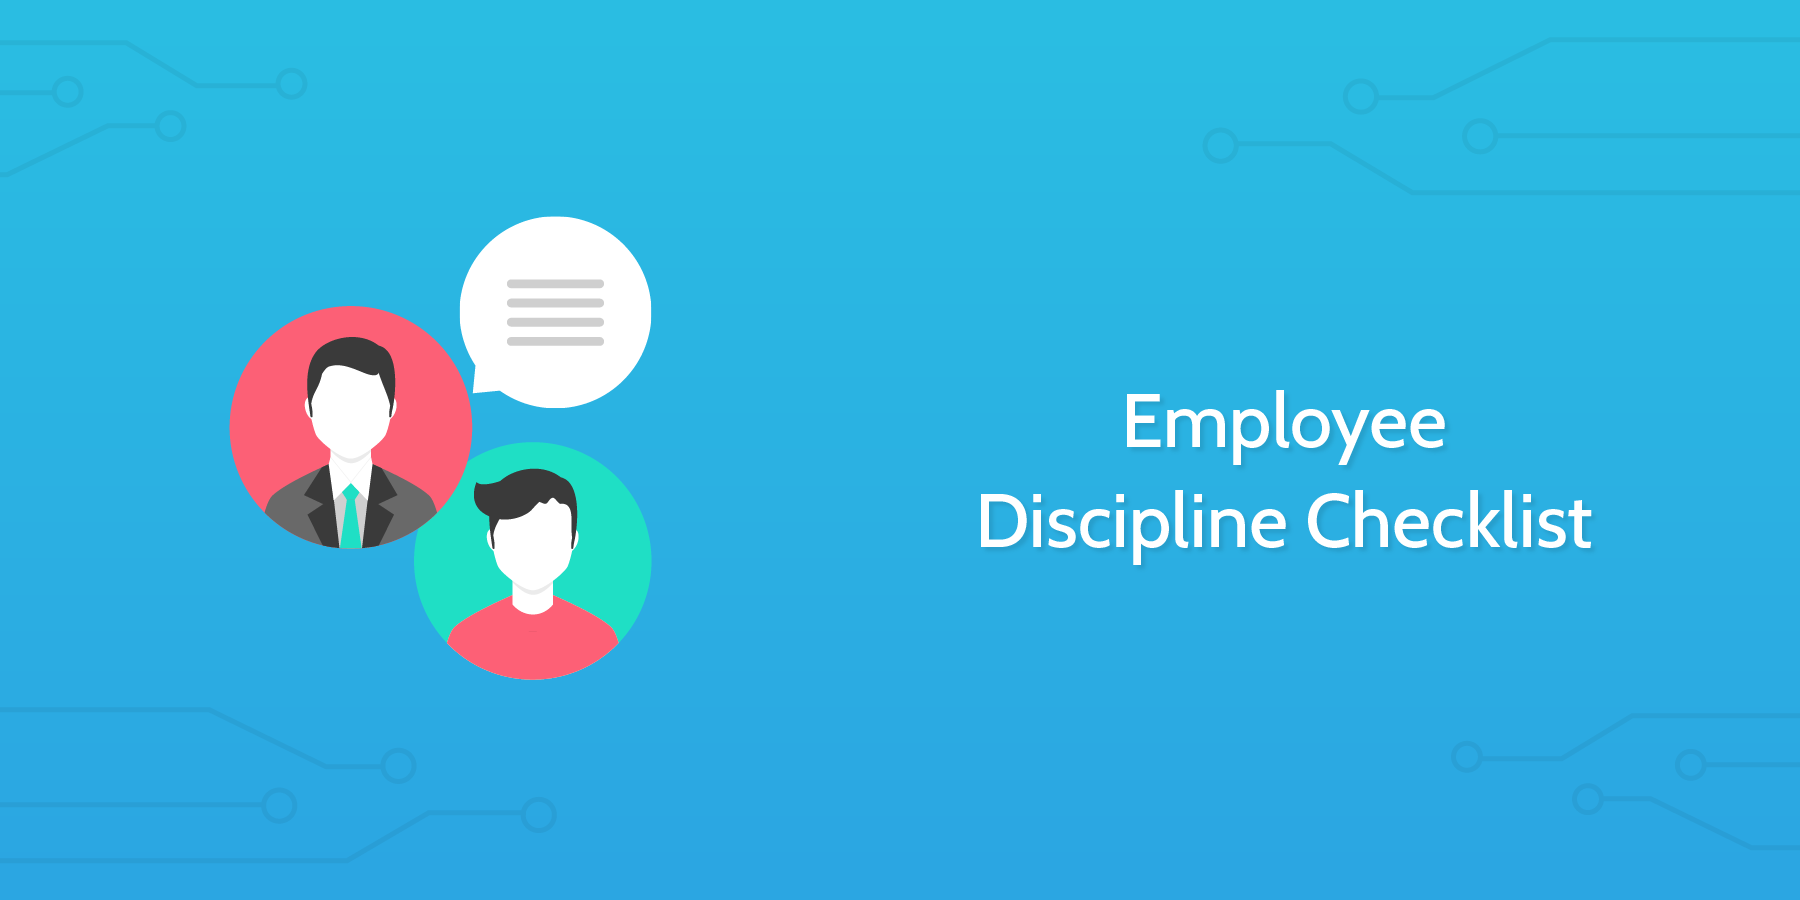 A Checklist for Employee Discipline